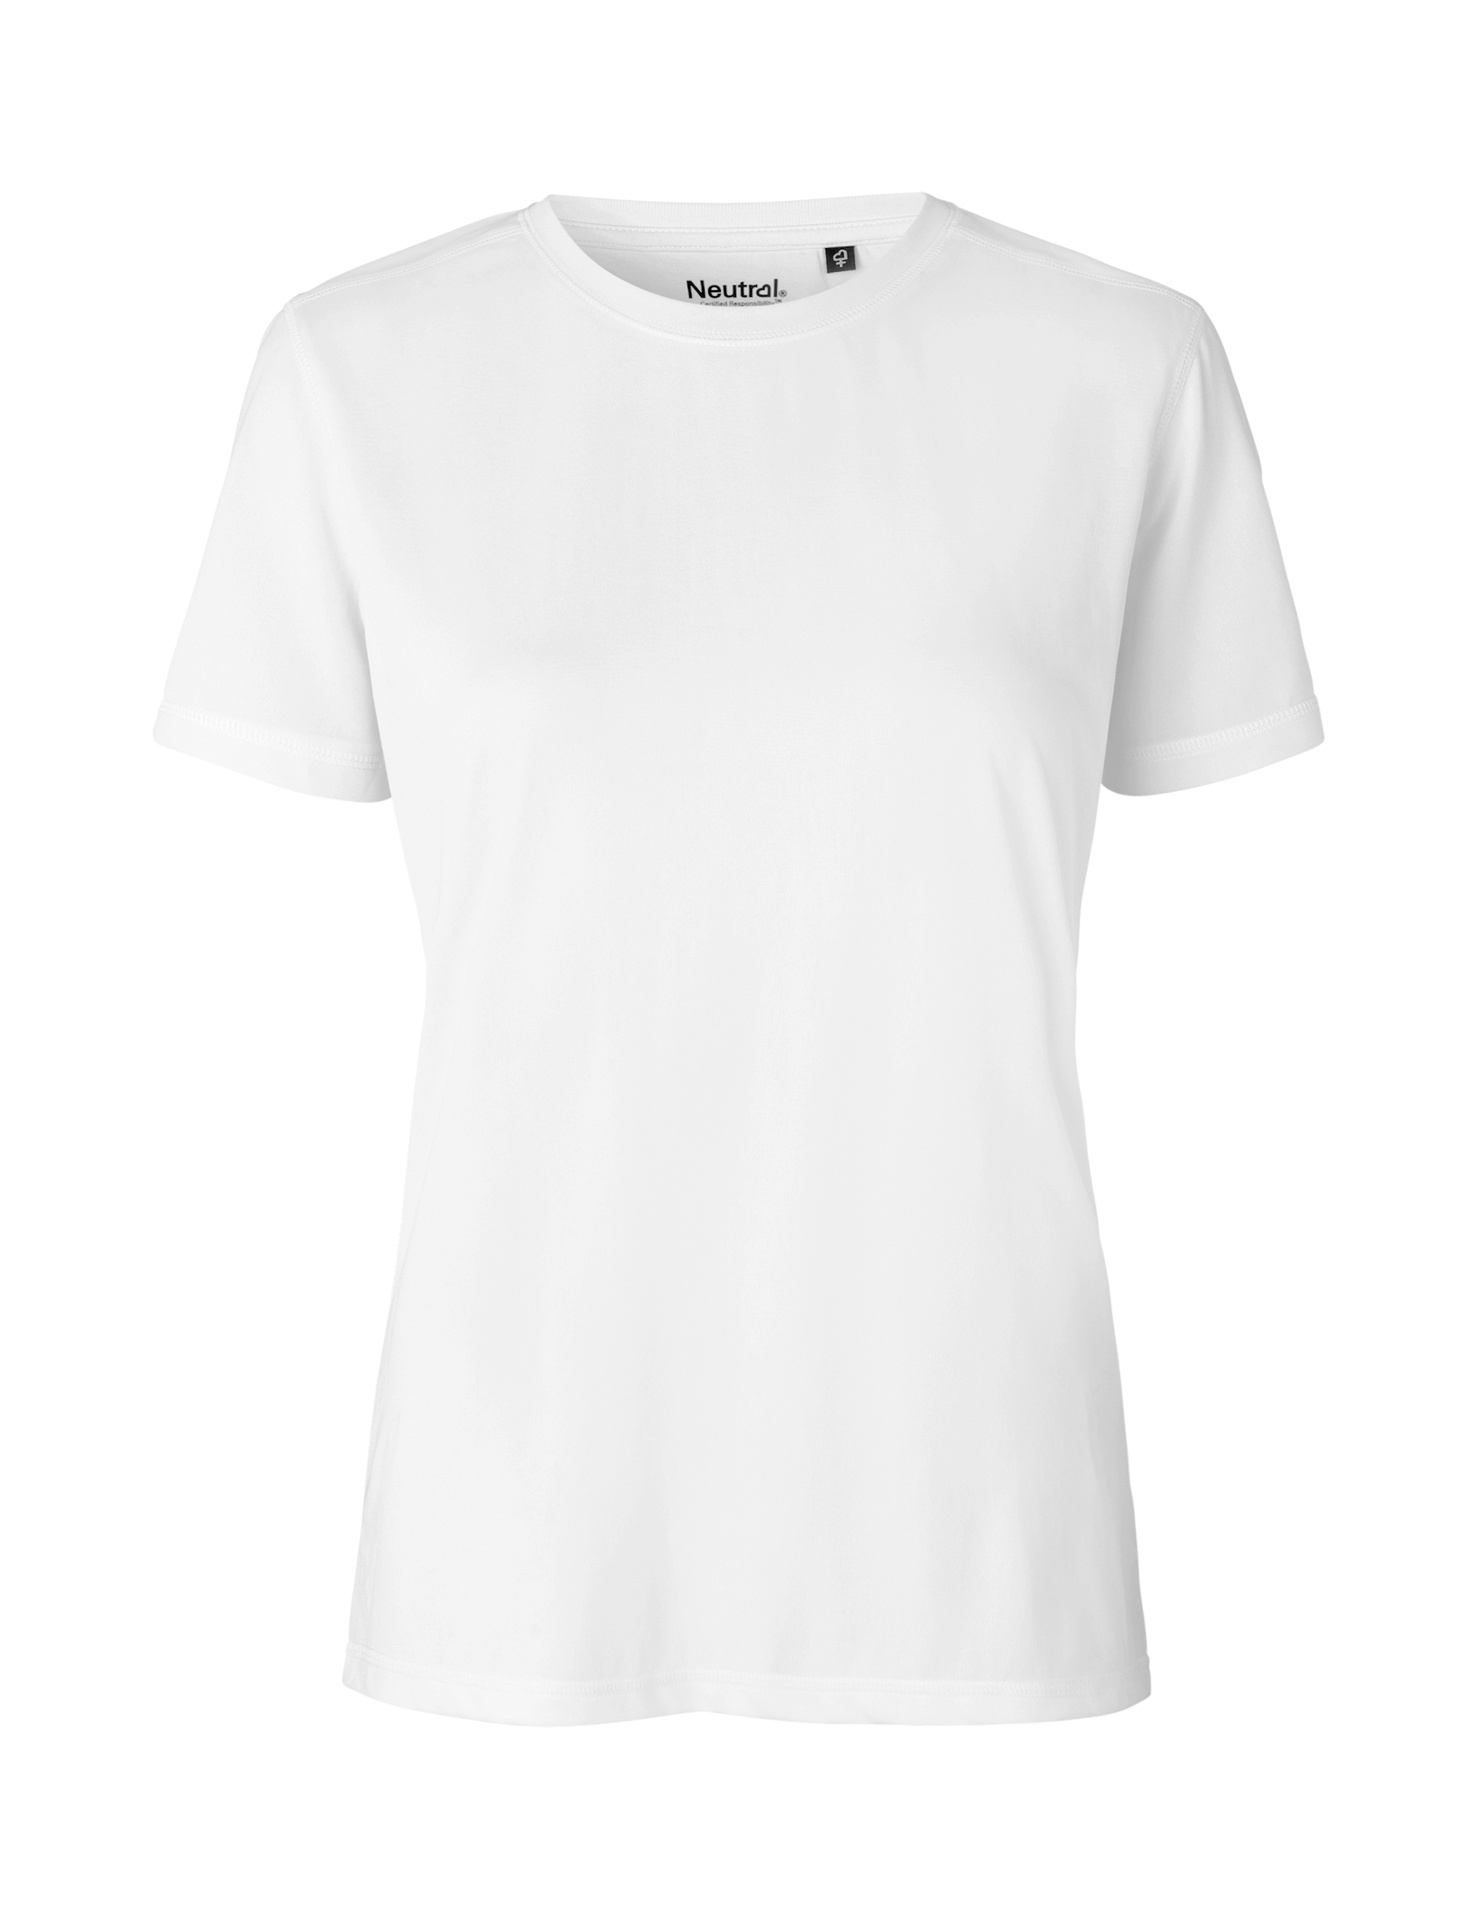 [PR/05195] Ladies Recycled Performance T-Shirt (White 01, L)